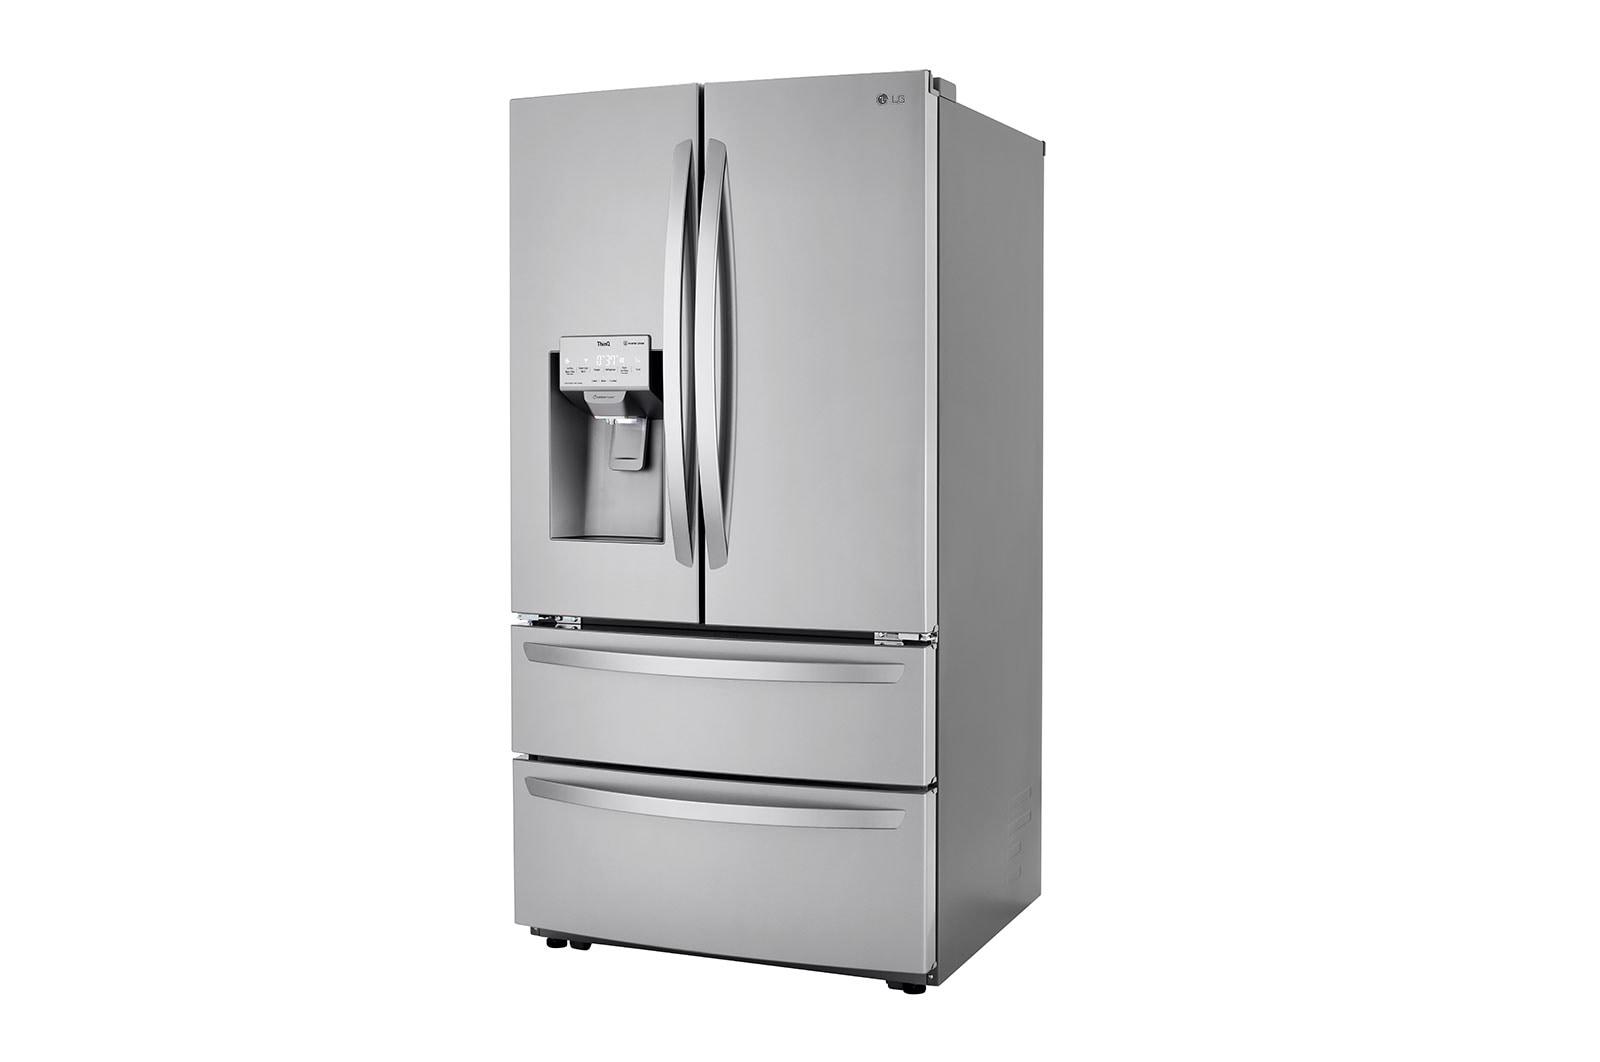 Lg 22 cu ft. Smart Counter Depth Double Freezer Refrigerator